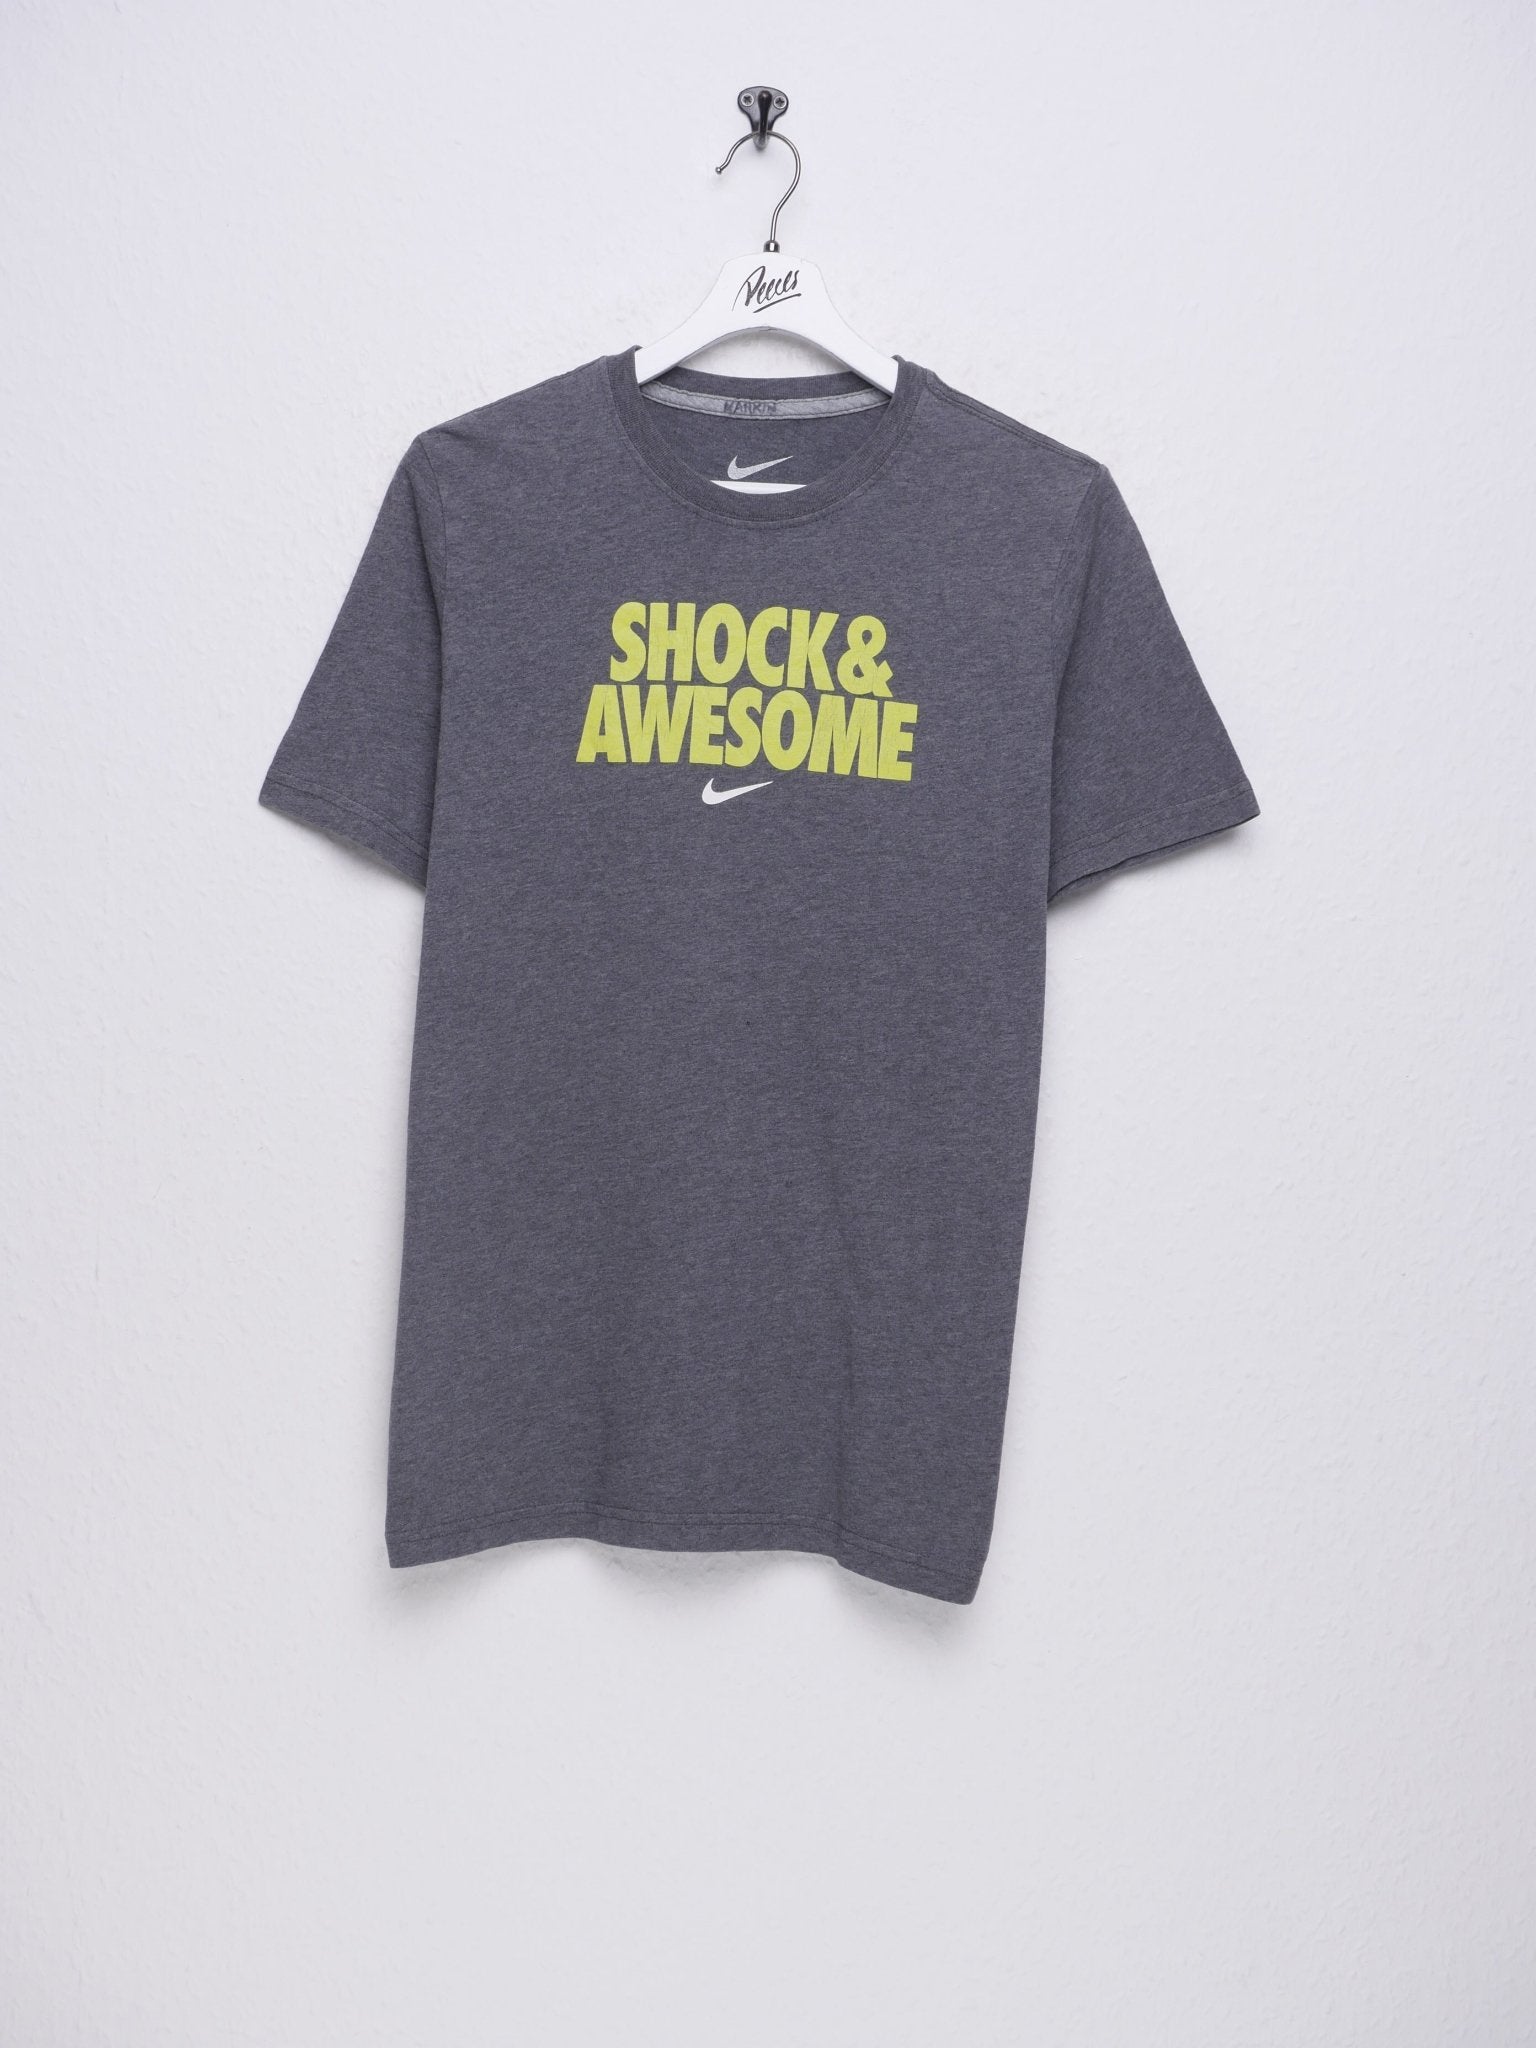 Nike Shock&Awesome printed Logo Shirt - Peeces